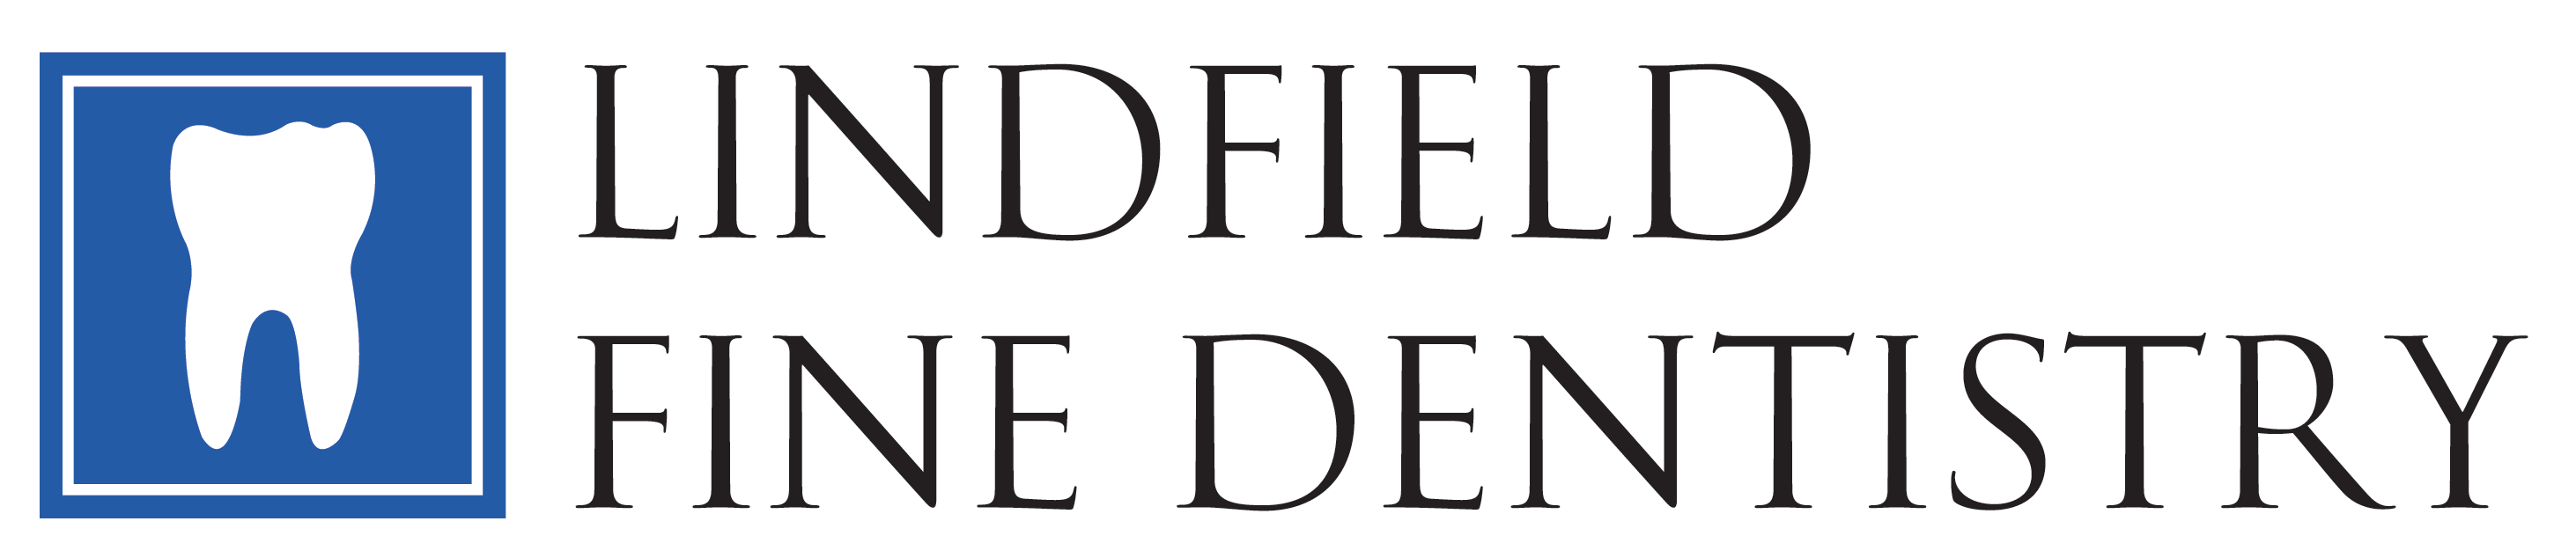 Lindfield Fine Dentistry